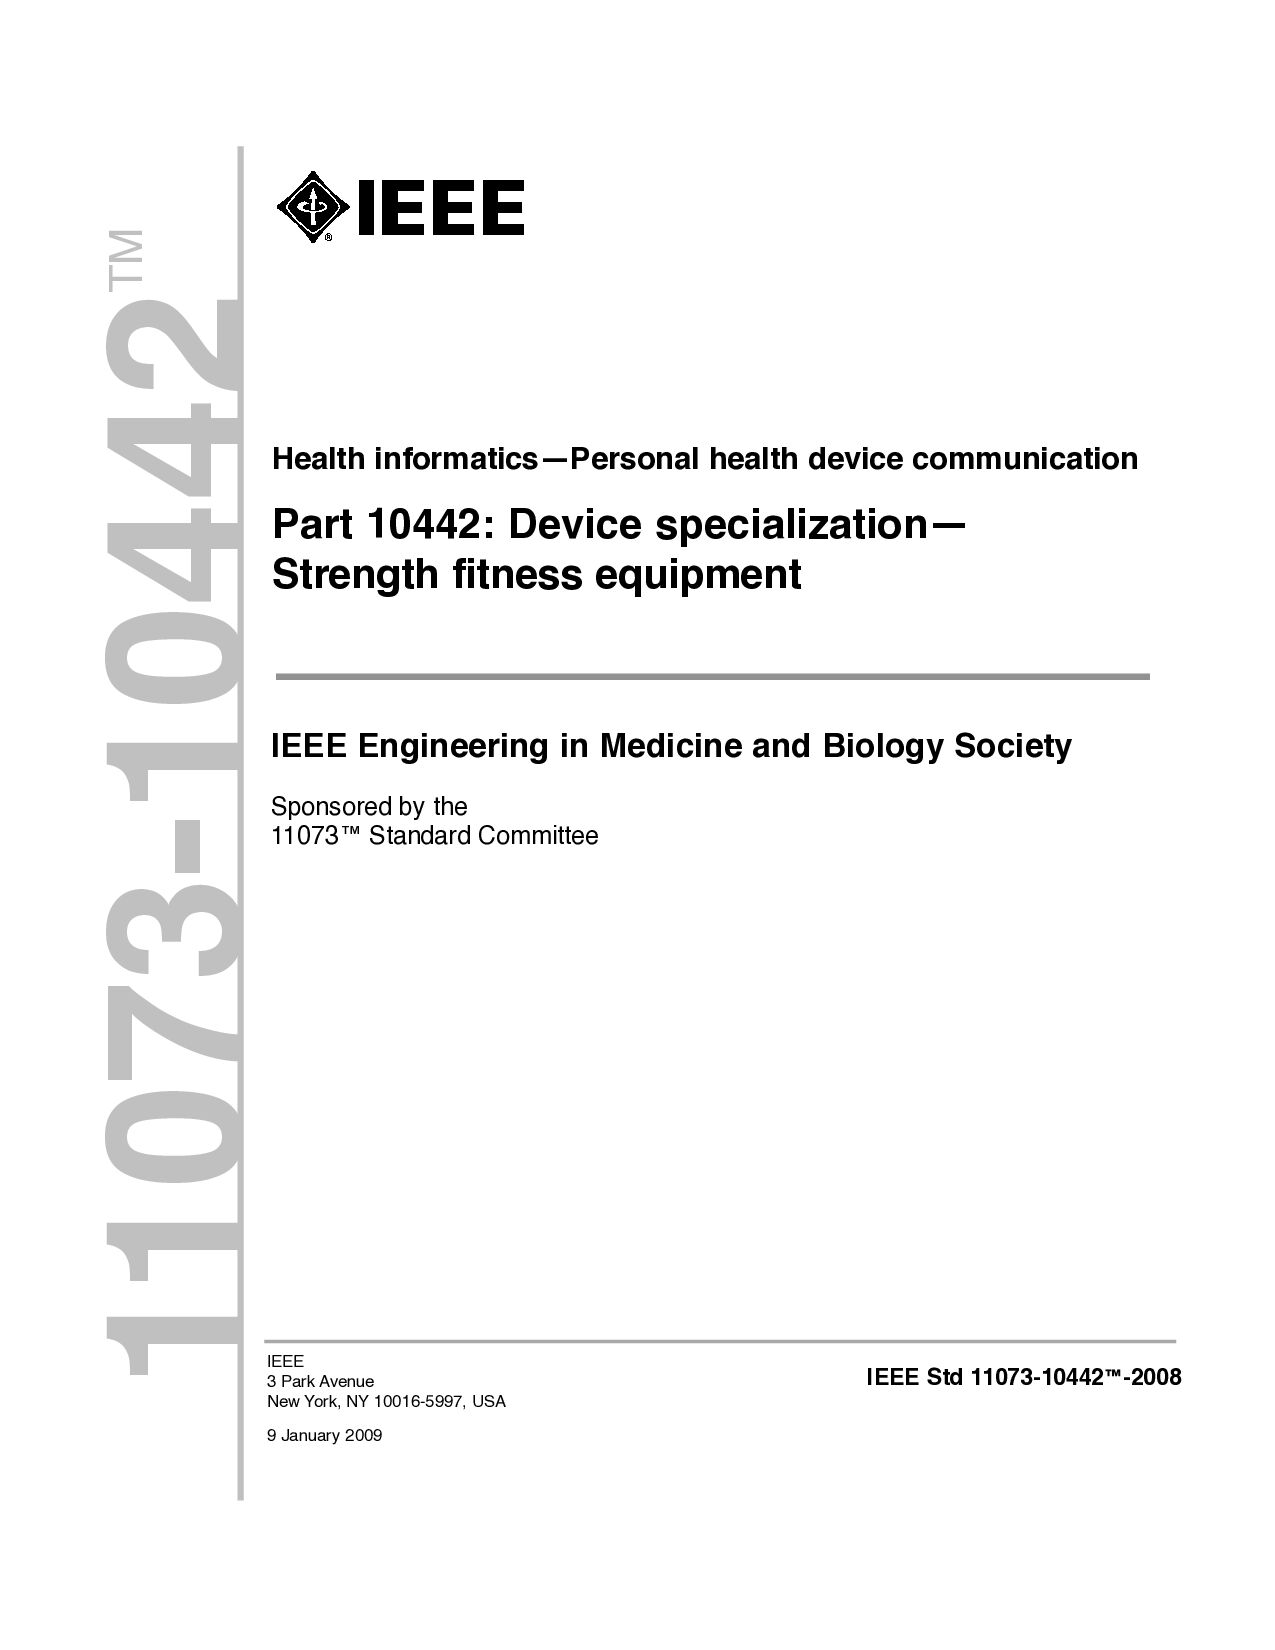 IEEE Std 11073-10442-2008